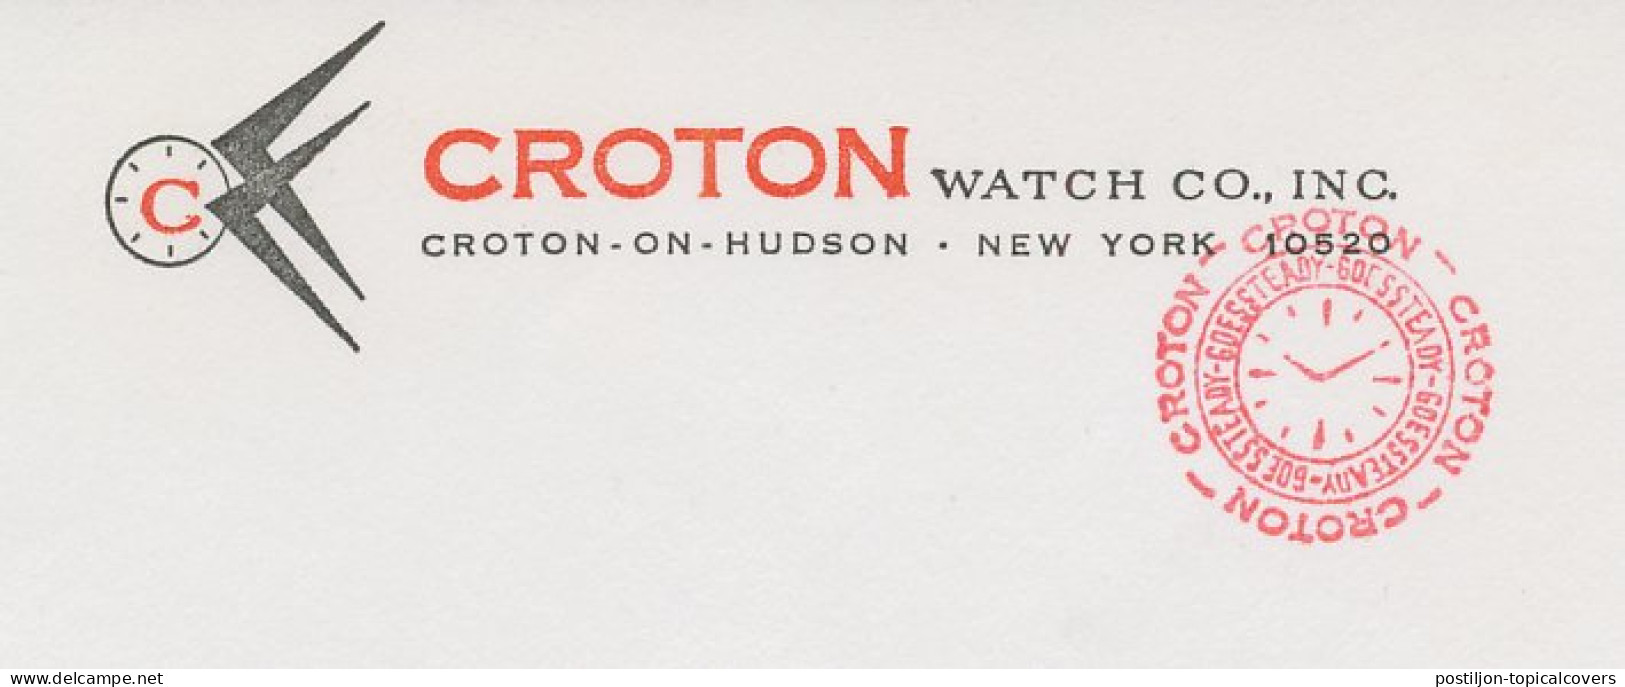 Meter Top Cut USA 1968 Watch - Croton - Clocks